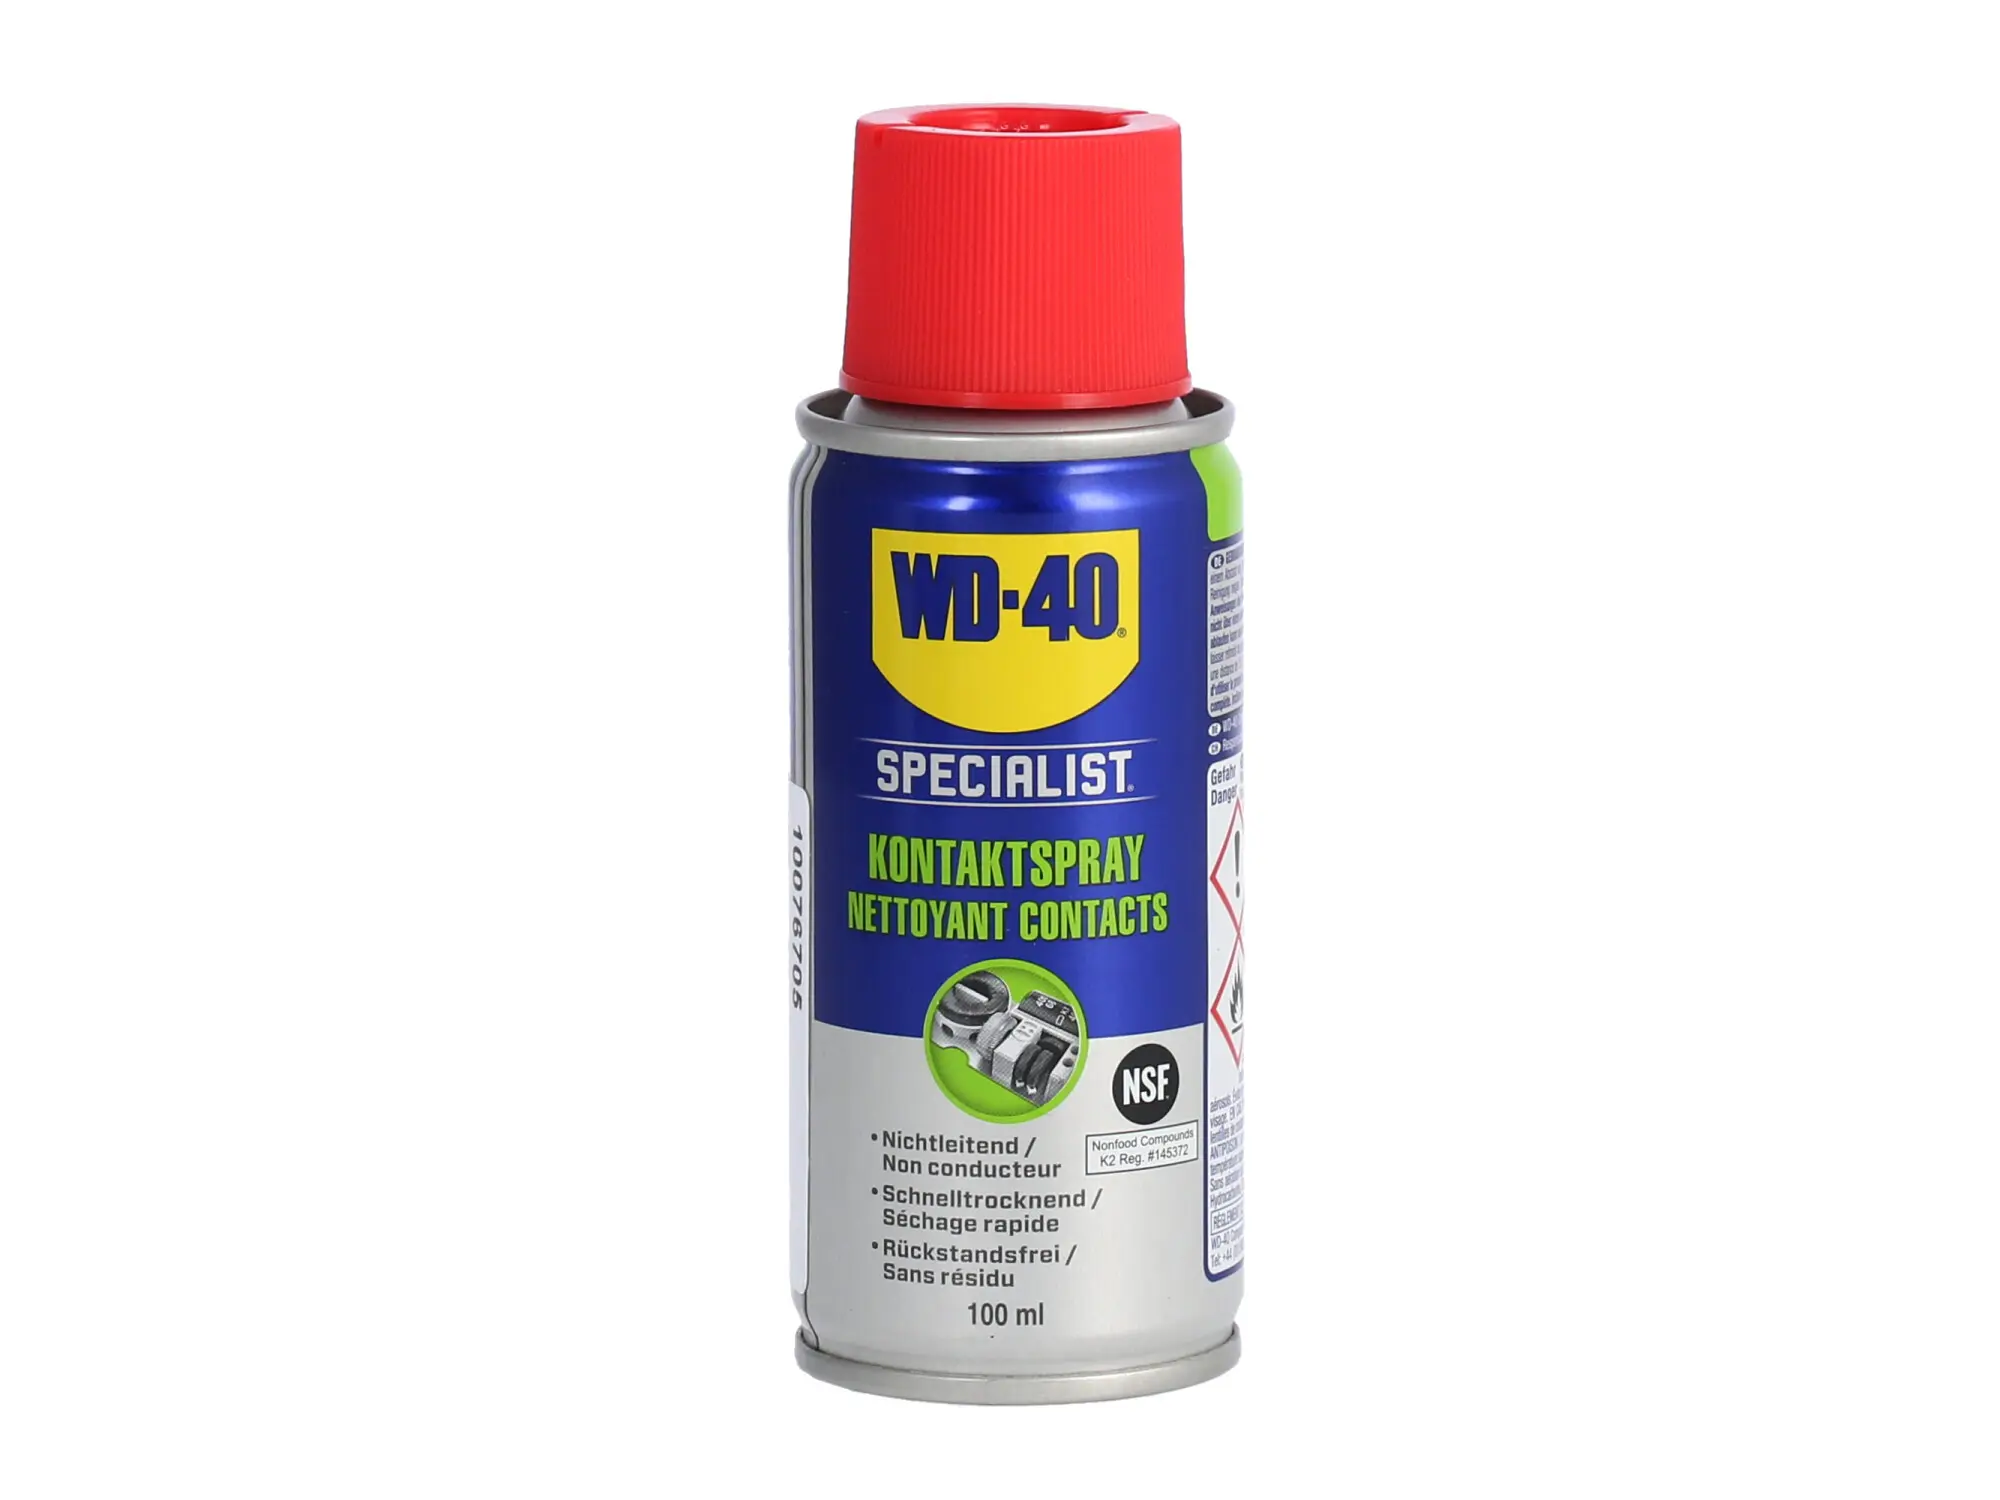 WD-40 SPECIALIST Kontaktspray Spraydose - 100ml, Art.-Nr.: 10076705 - Bild 1